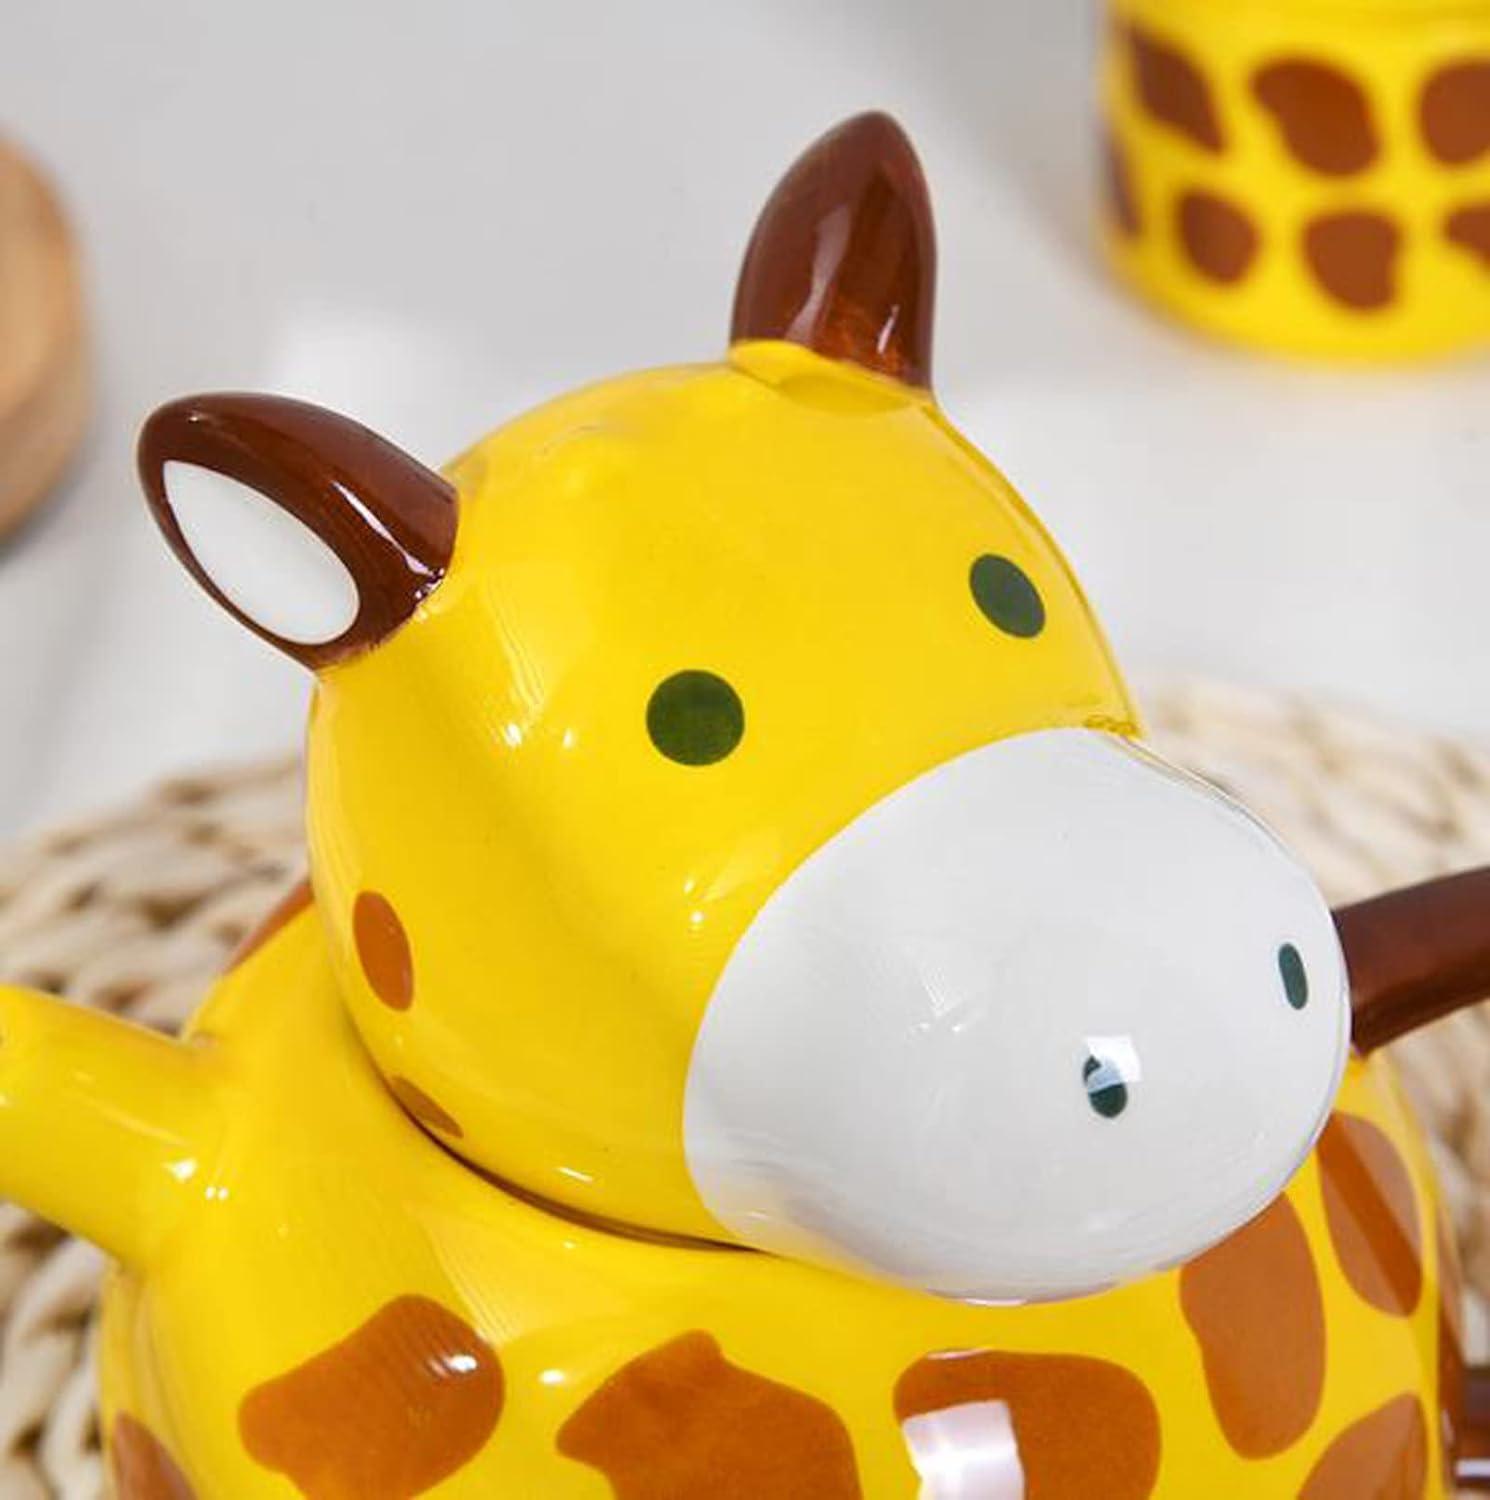 4 Piece Handmade Ceramic Stacking Giraffe Mug & Teapot Set - Home Inspired Gifts